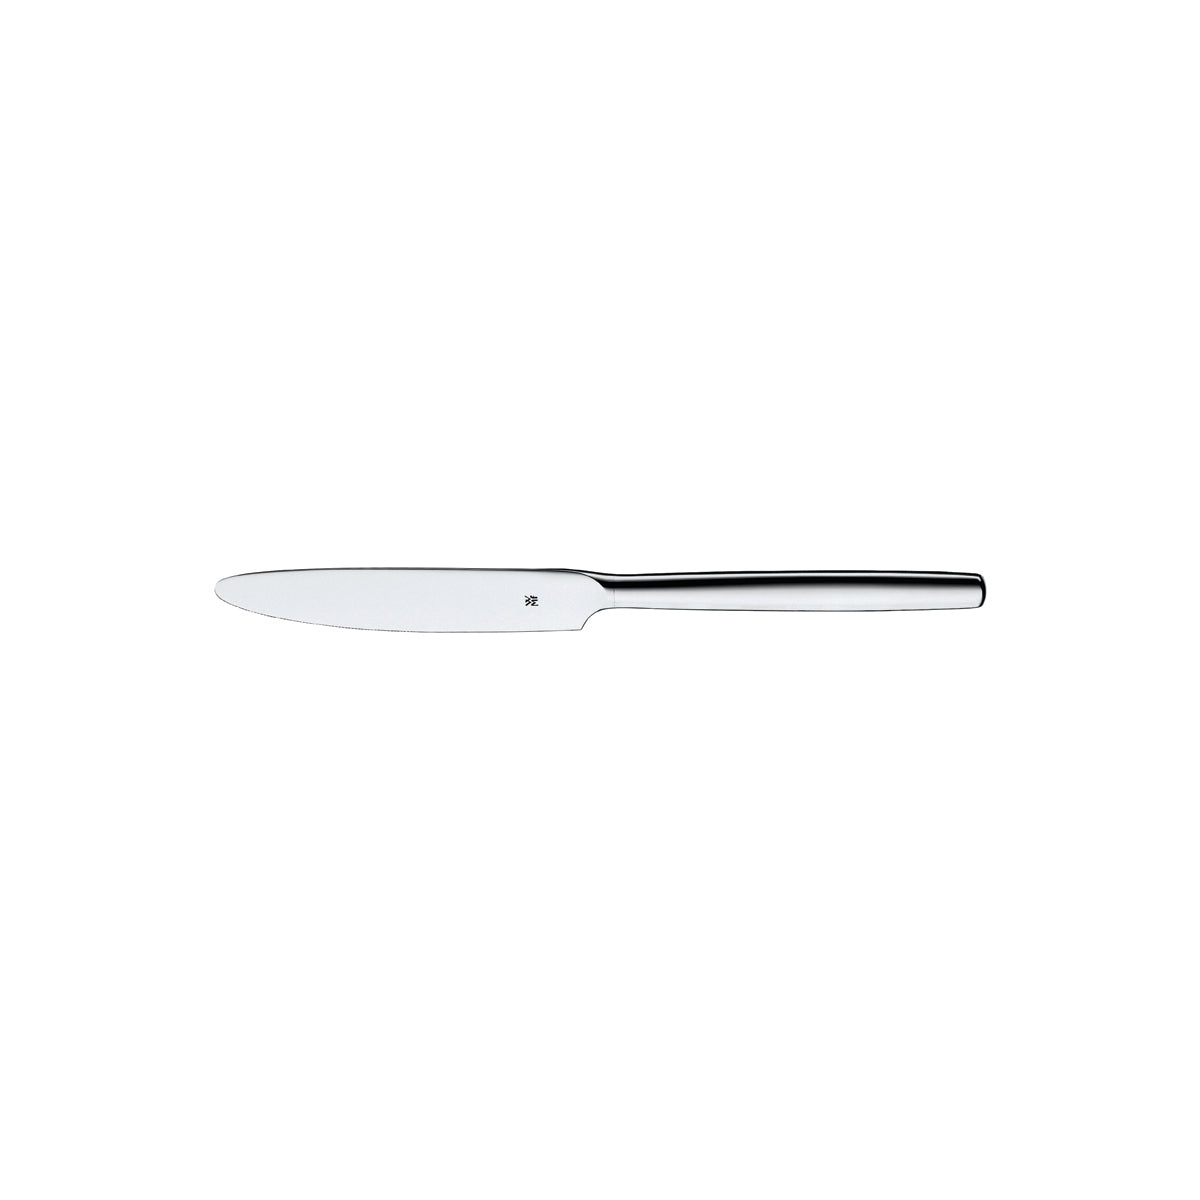 01.0403.6069 WMF Bistro Table Knife Silverplated Tomkin Australia Hospitality Supplies